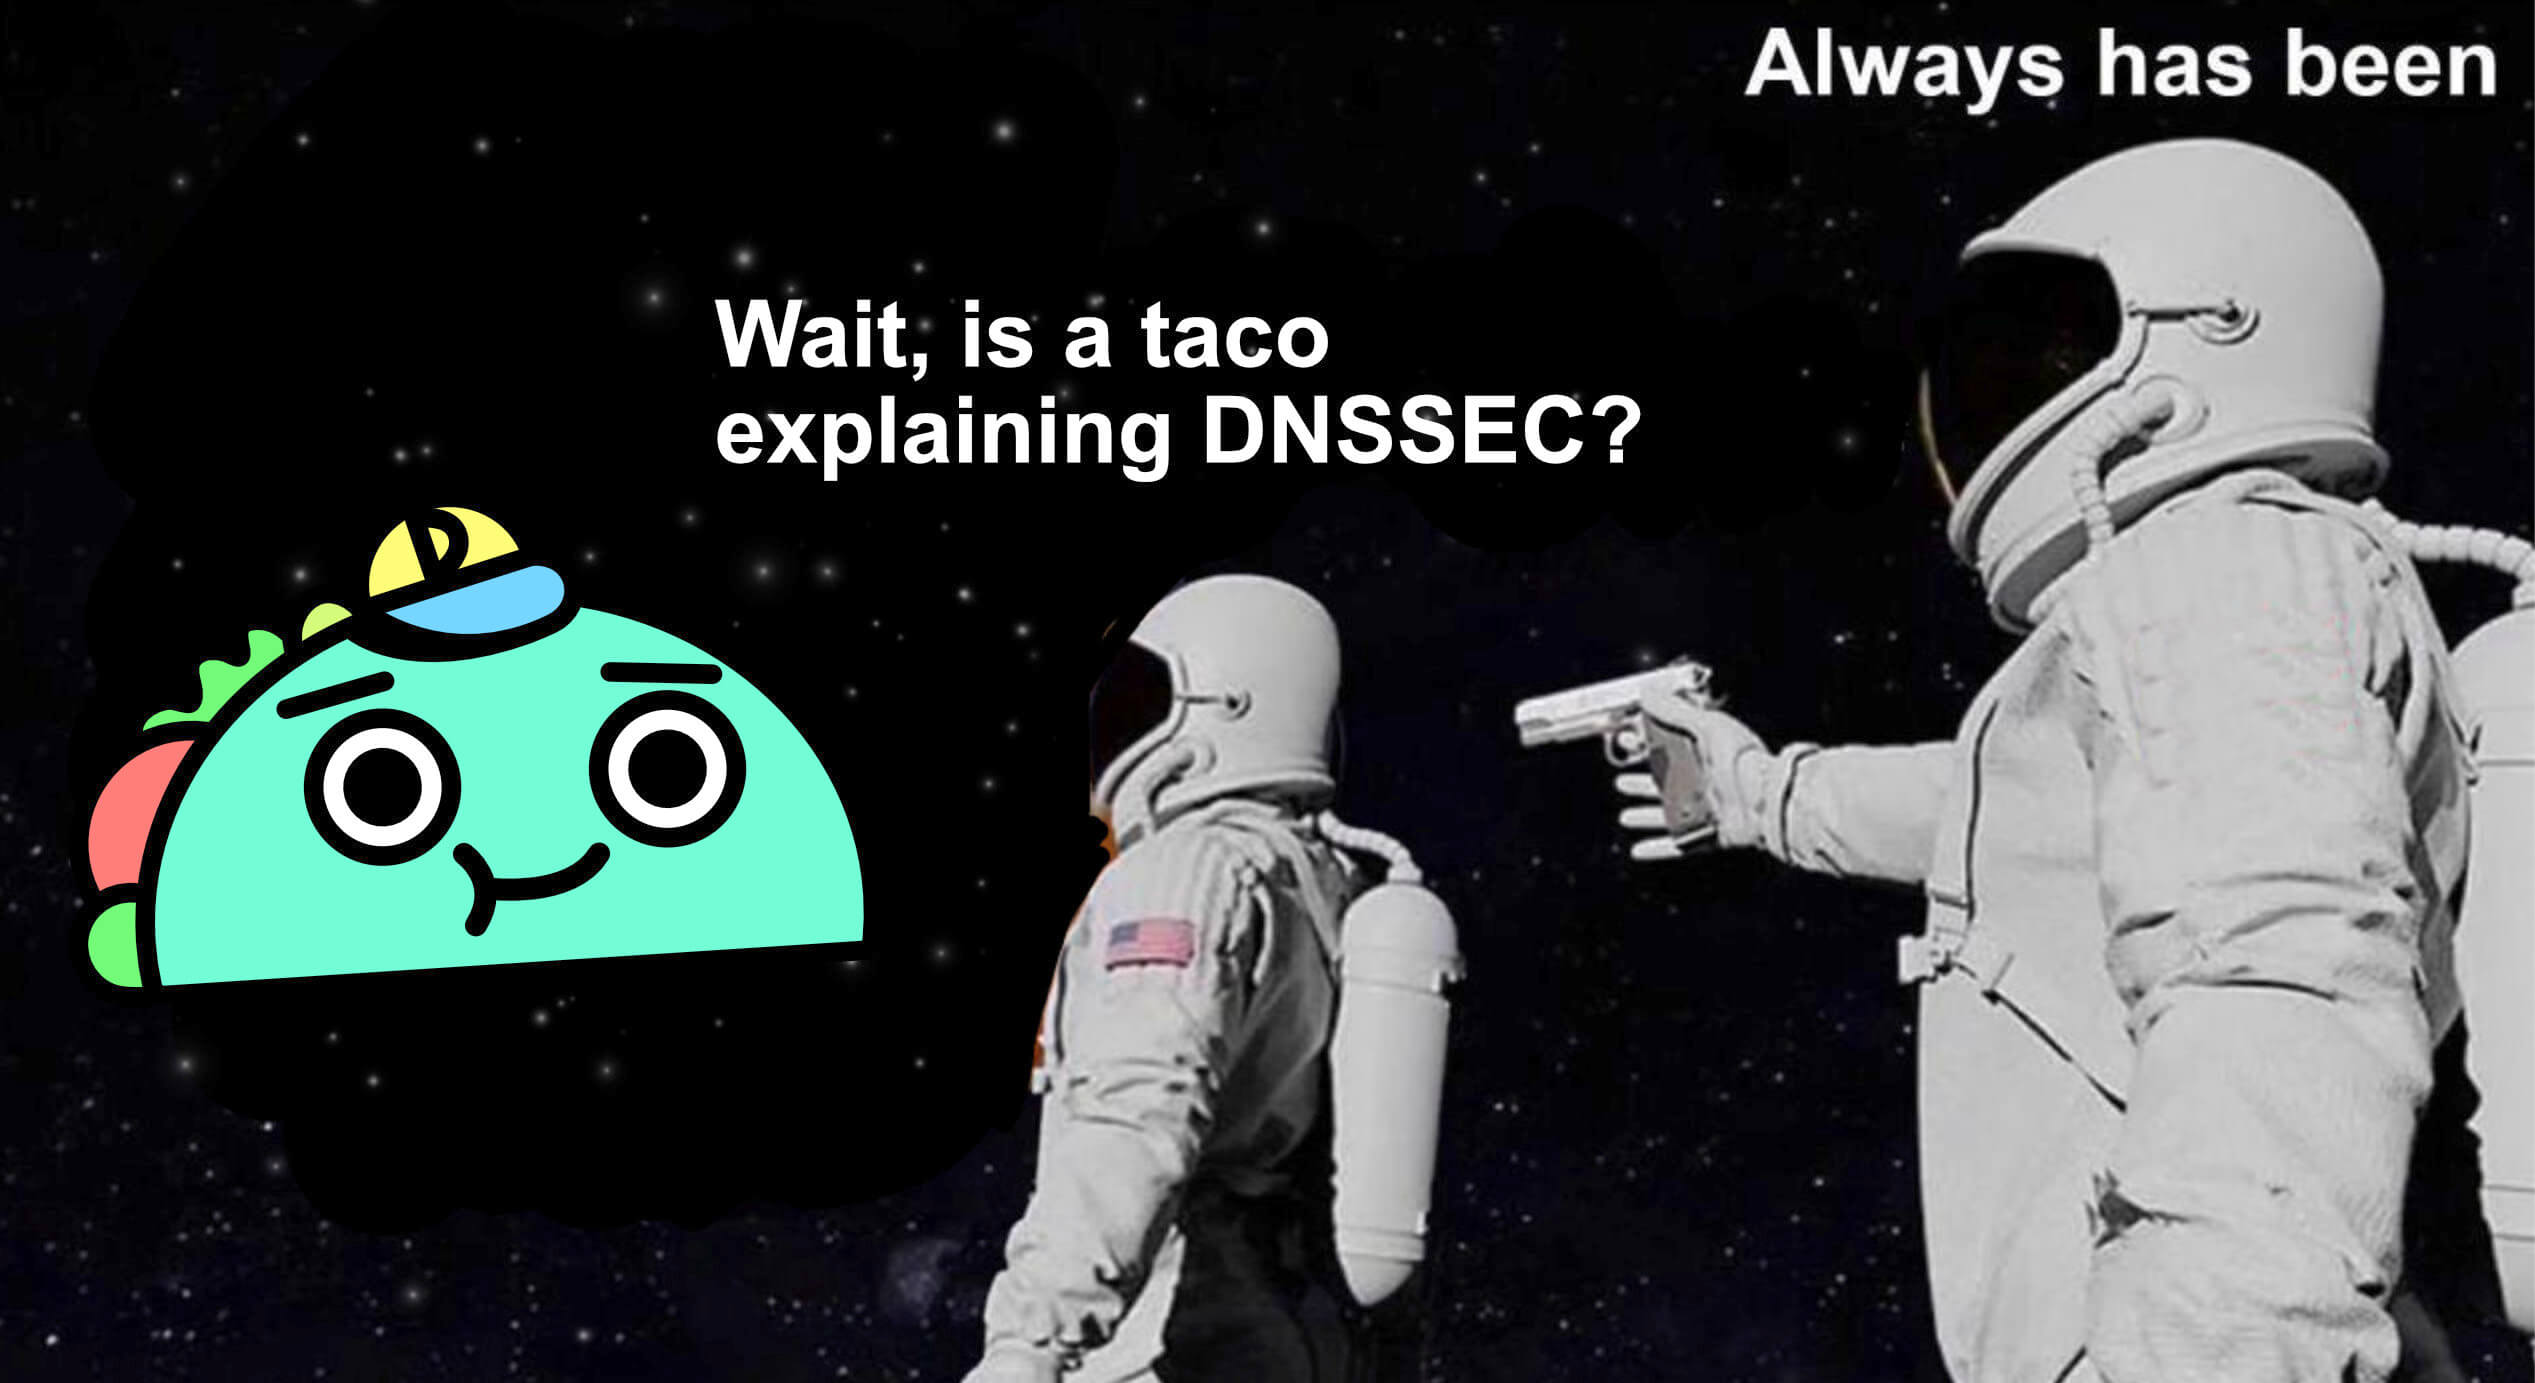 Wait, is a taco explaining DNSSEC? Always has been